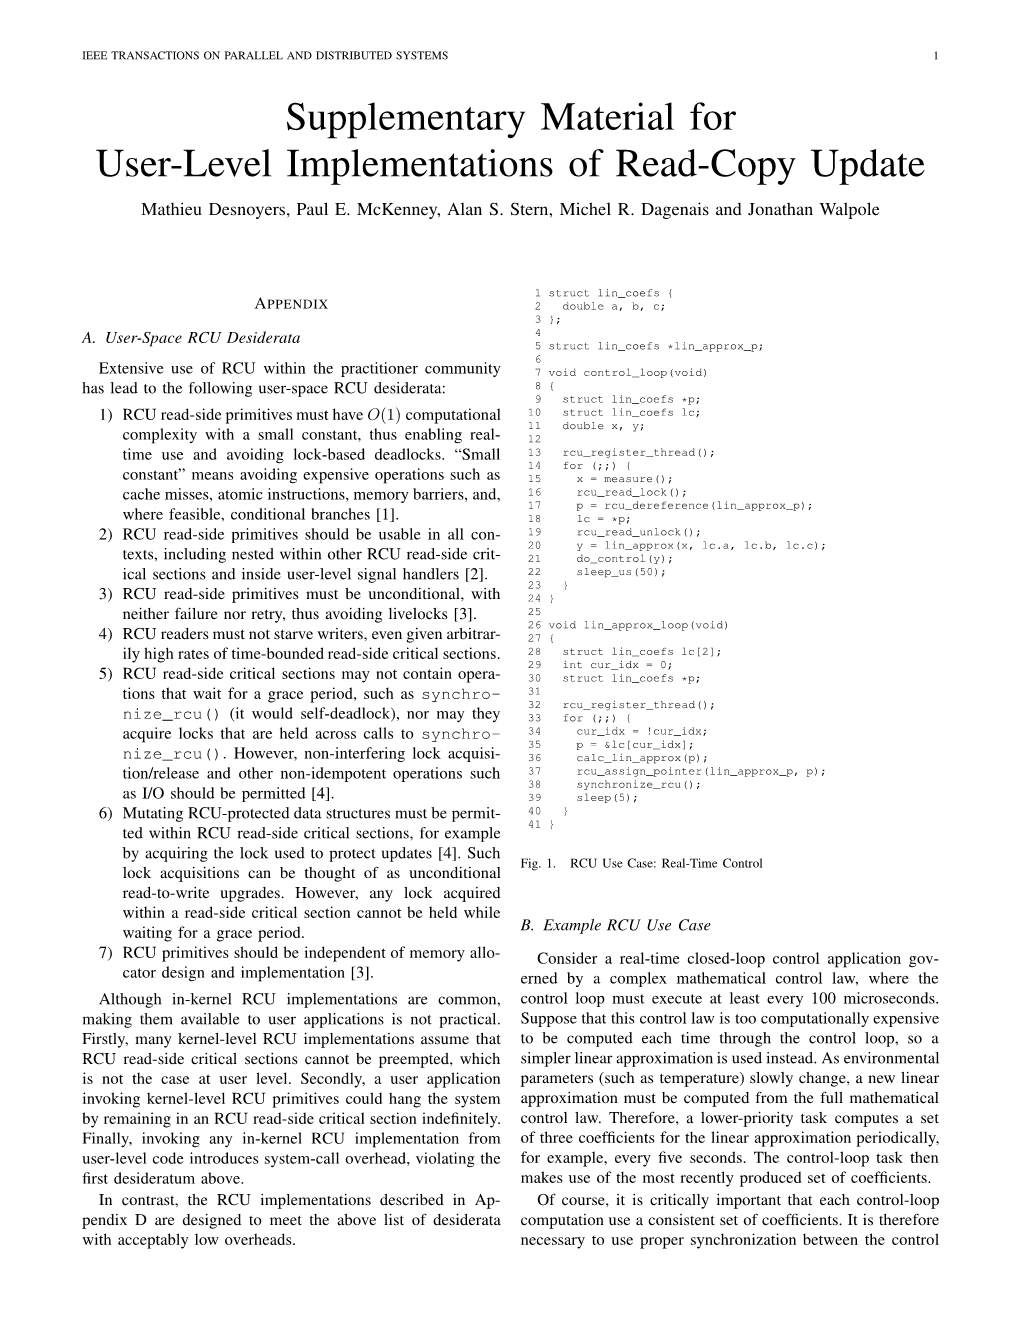 User-Level Implementations of Read-Copy Update Mathieu Desnoyers, Paul E